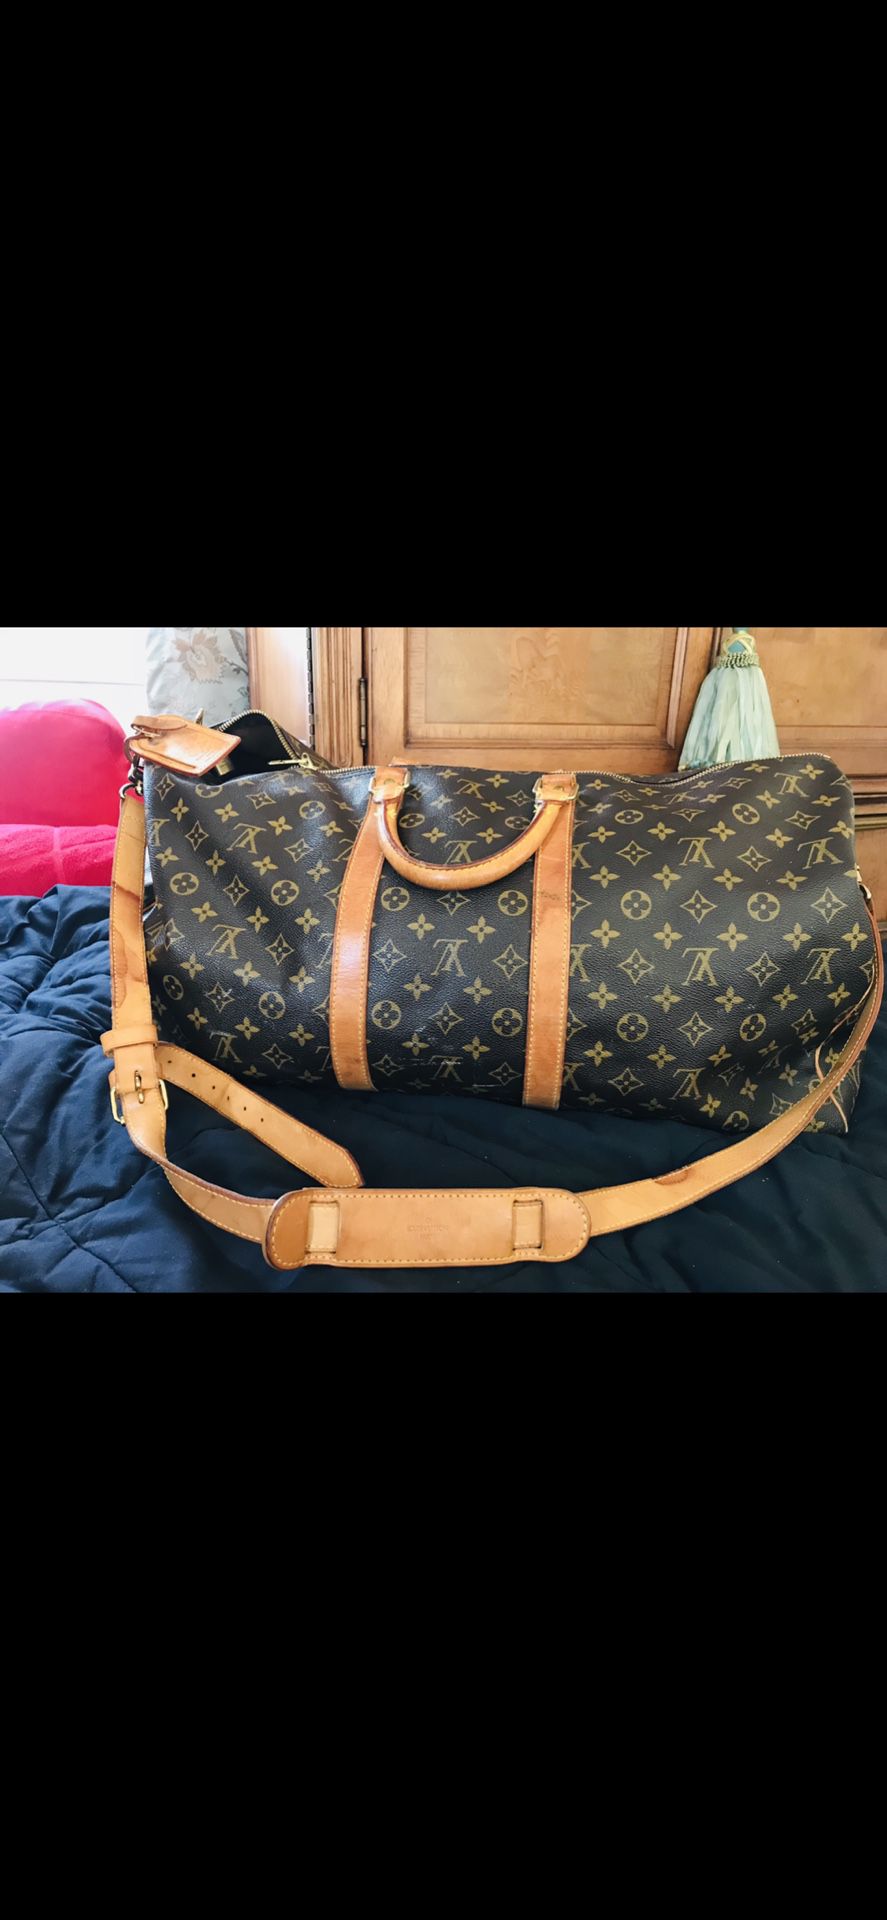 $600 LV Louis Vuitton Bag $600